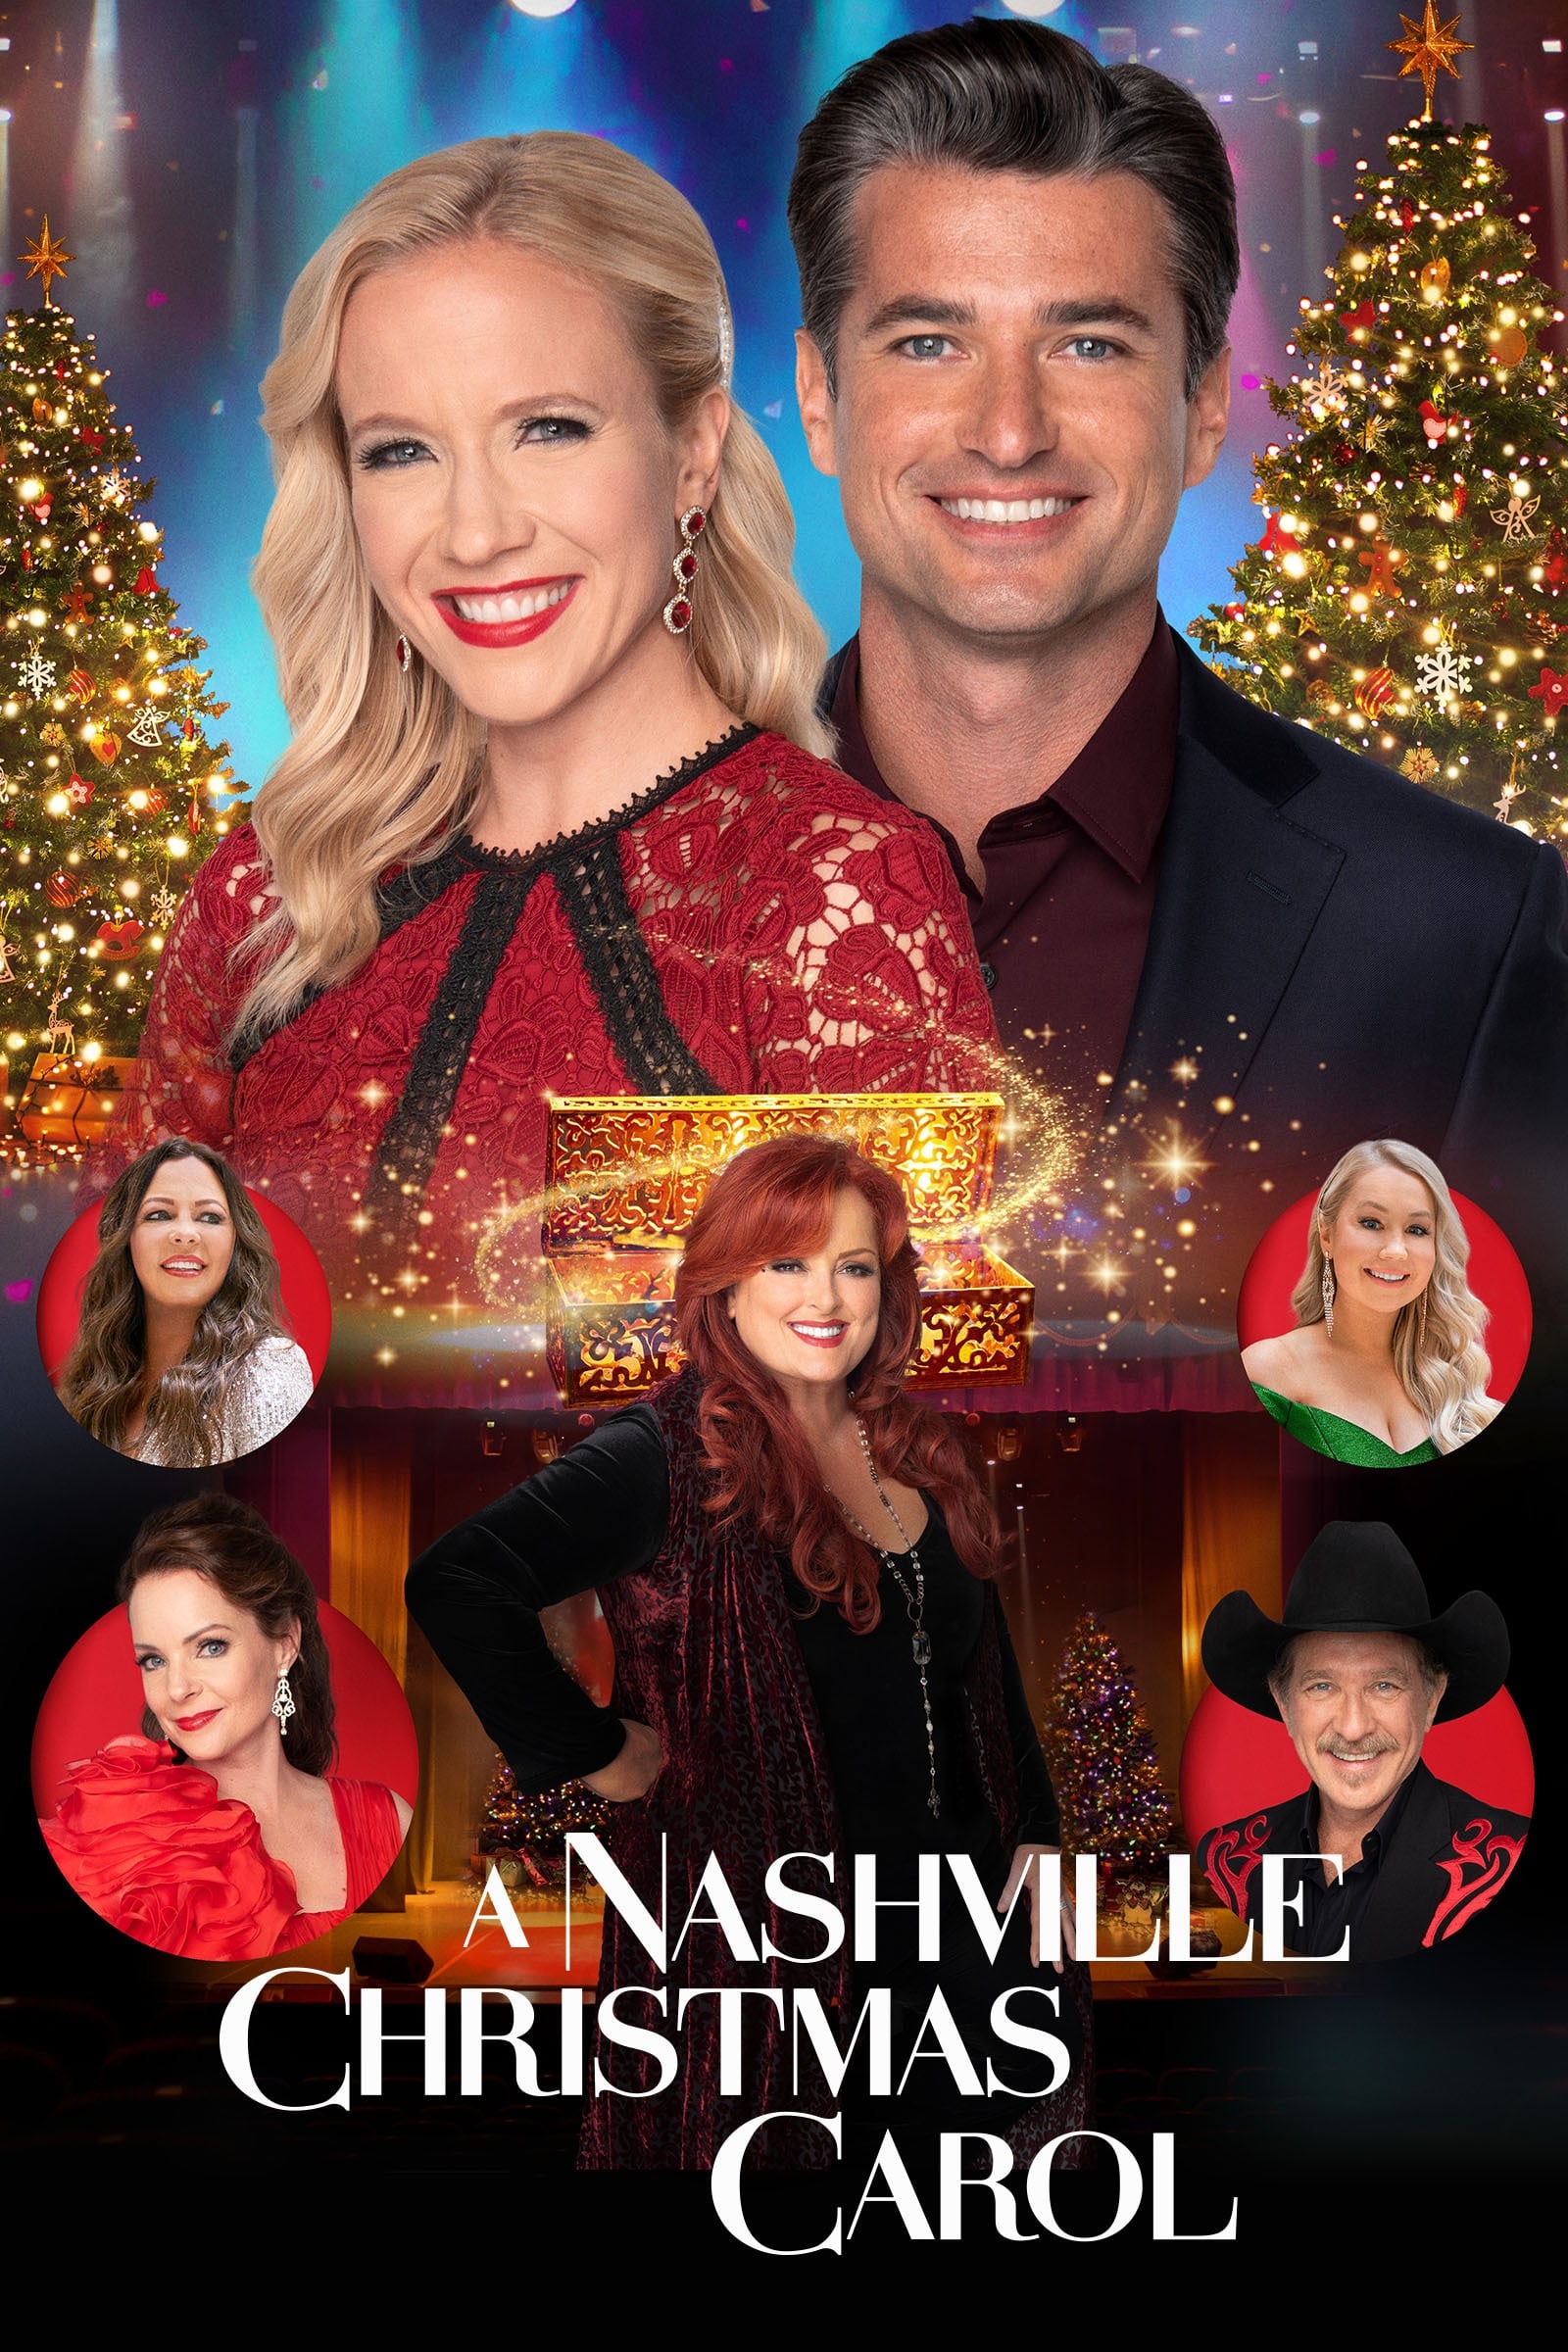 Image for movie A Nashville Christmas Carol